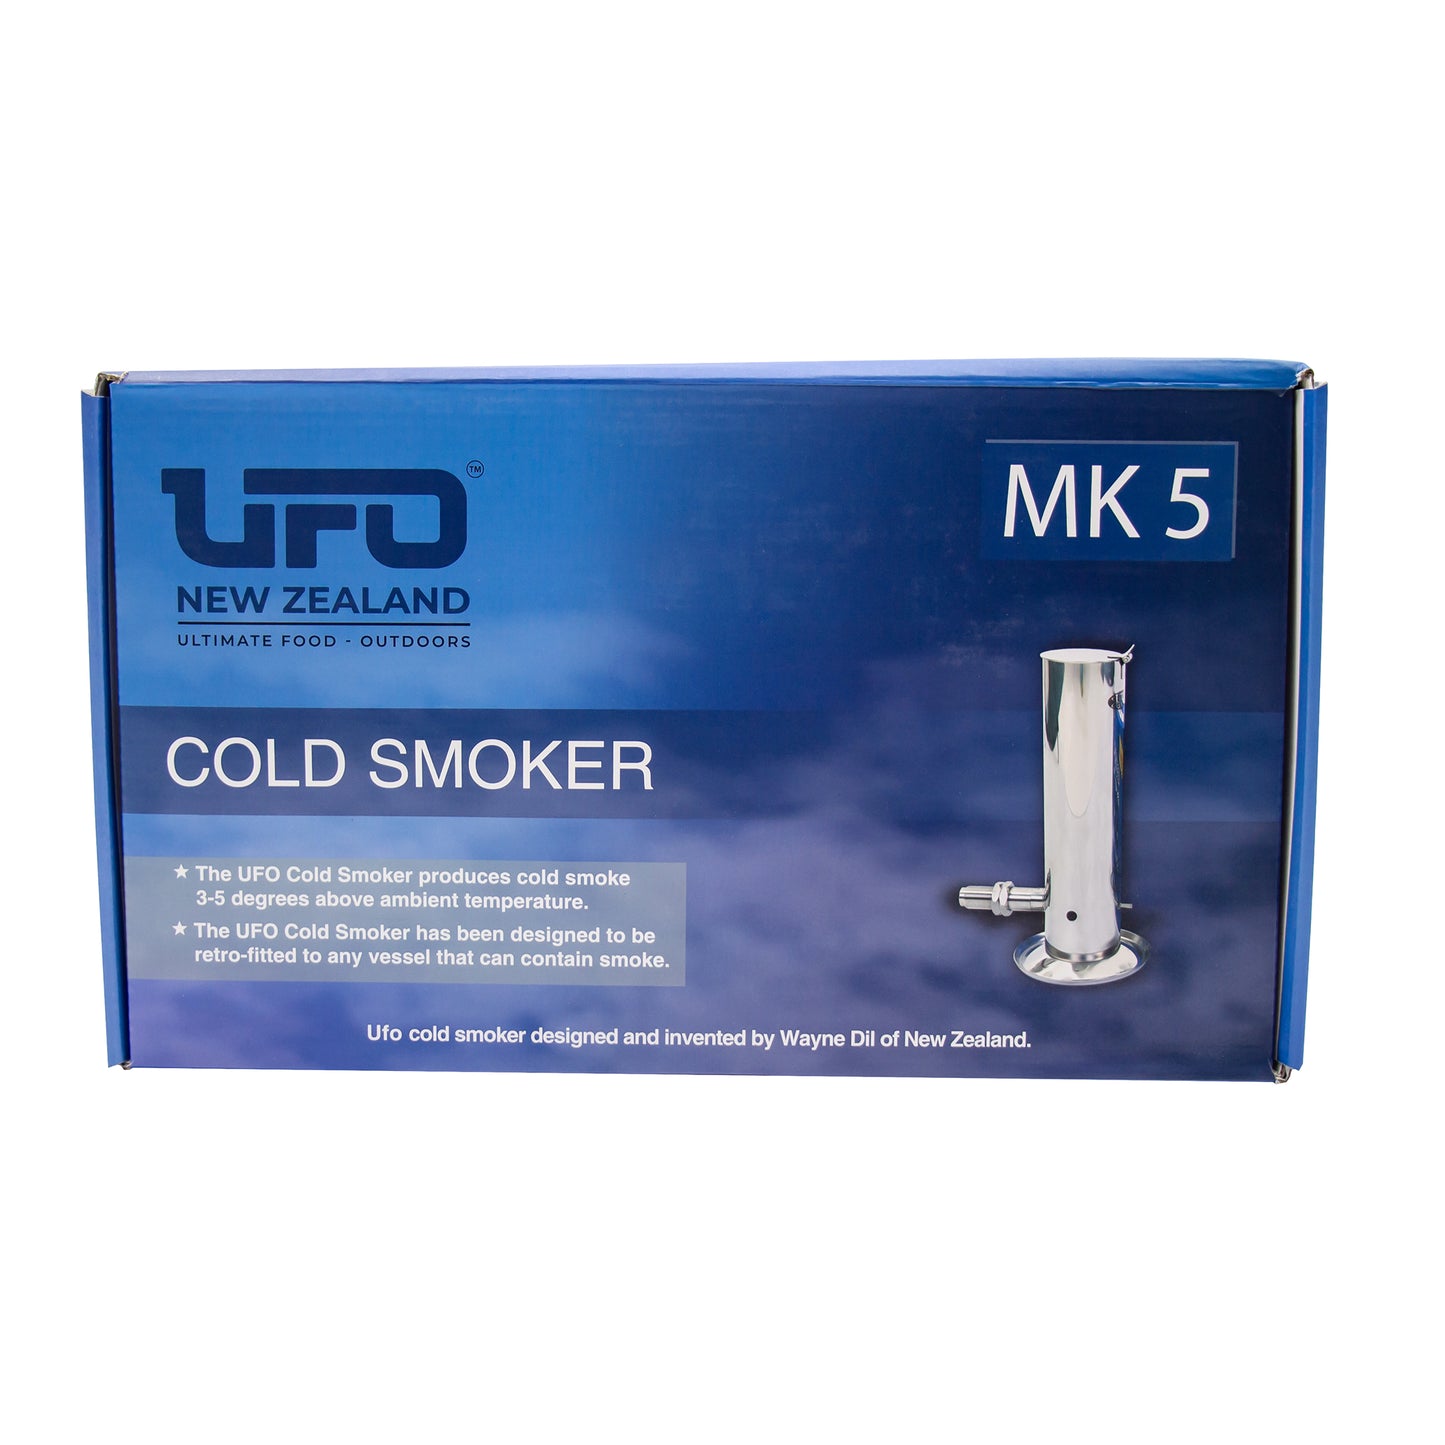 MK5 Cold smoker box